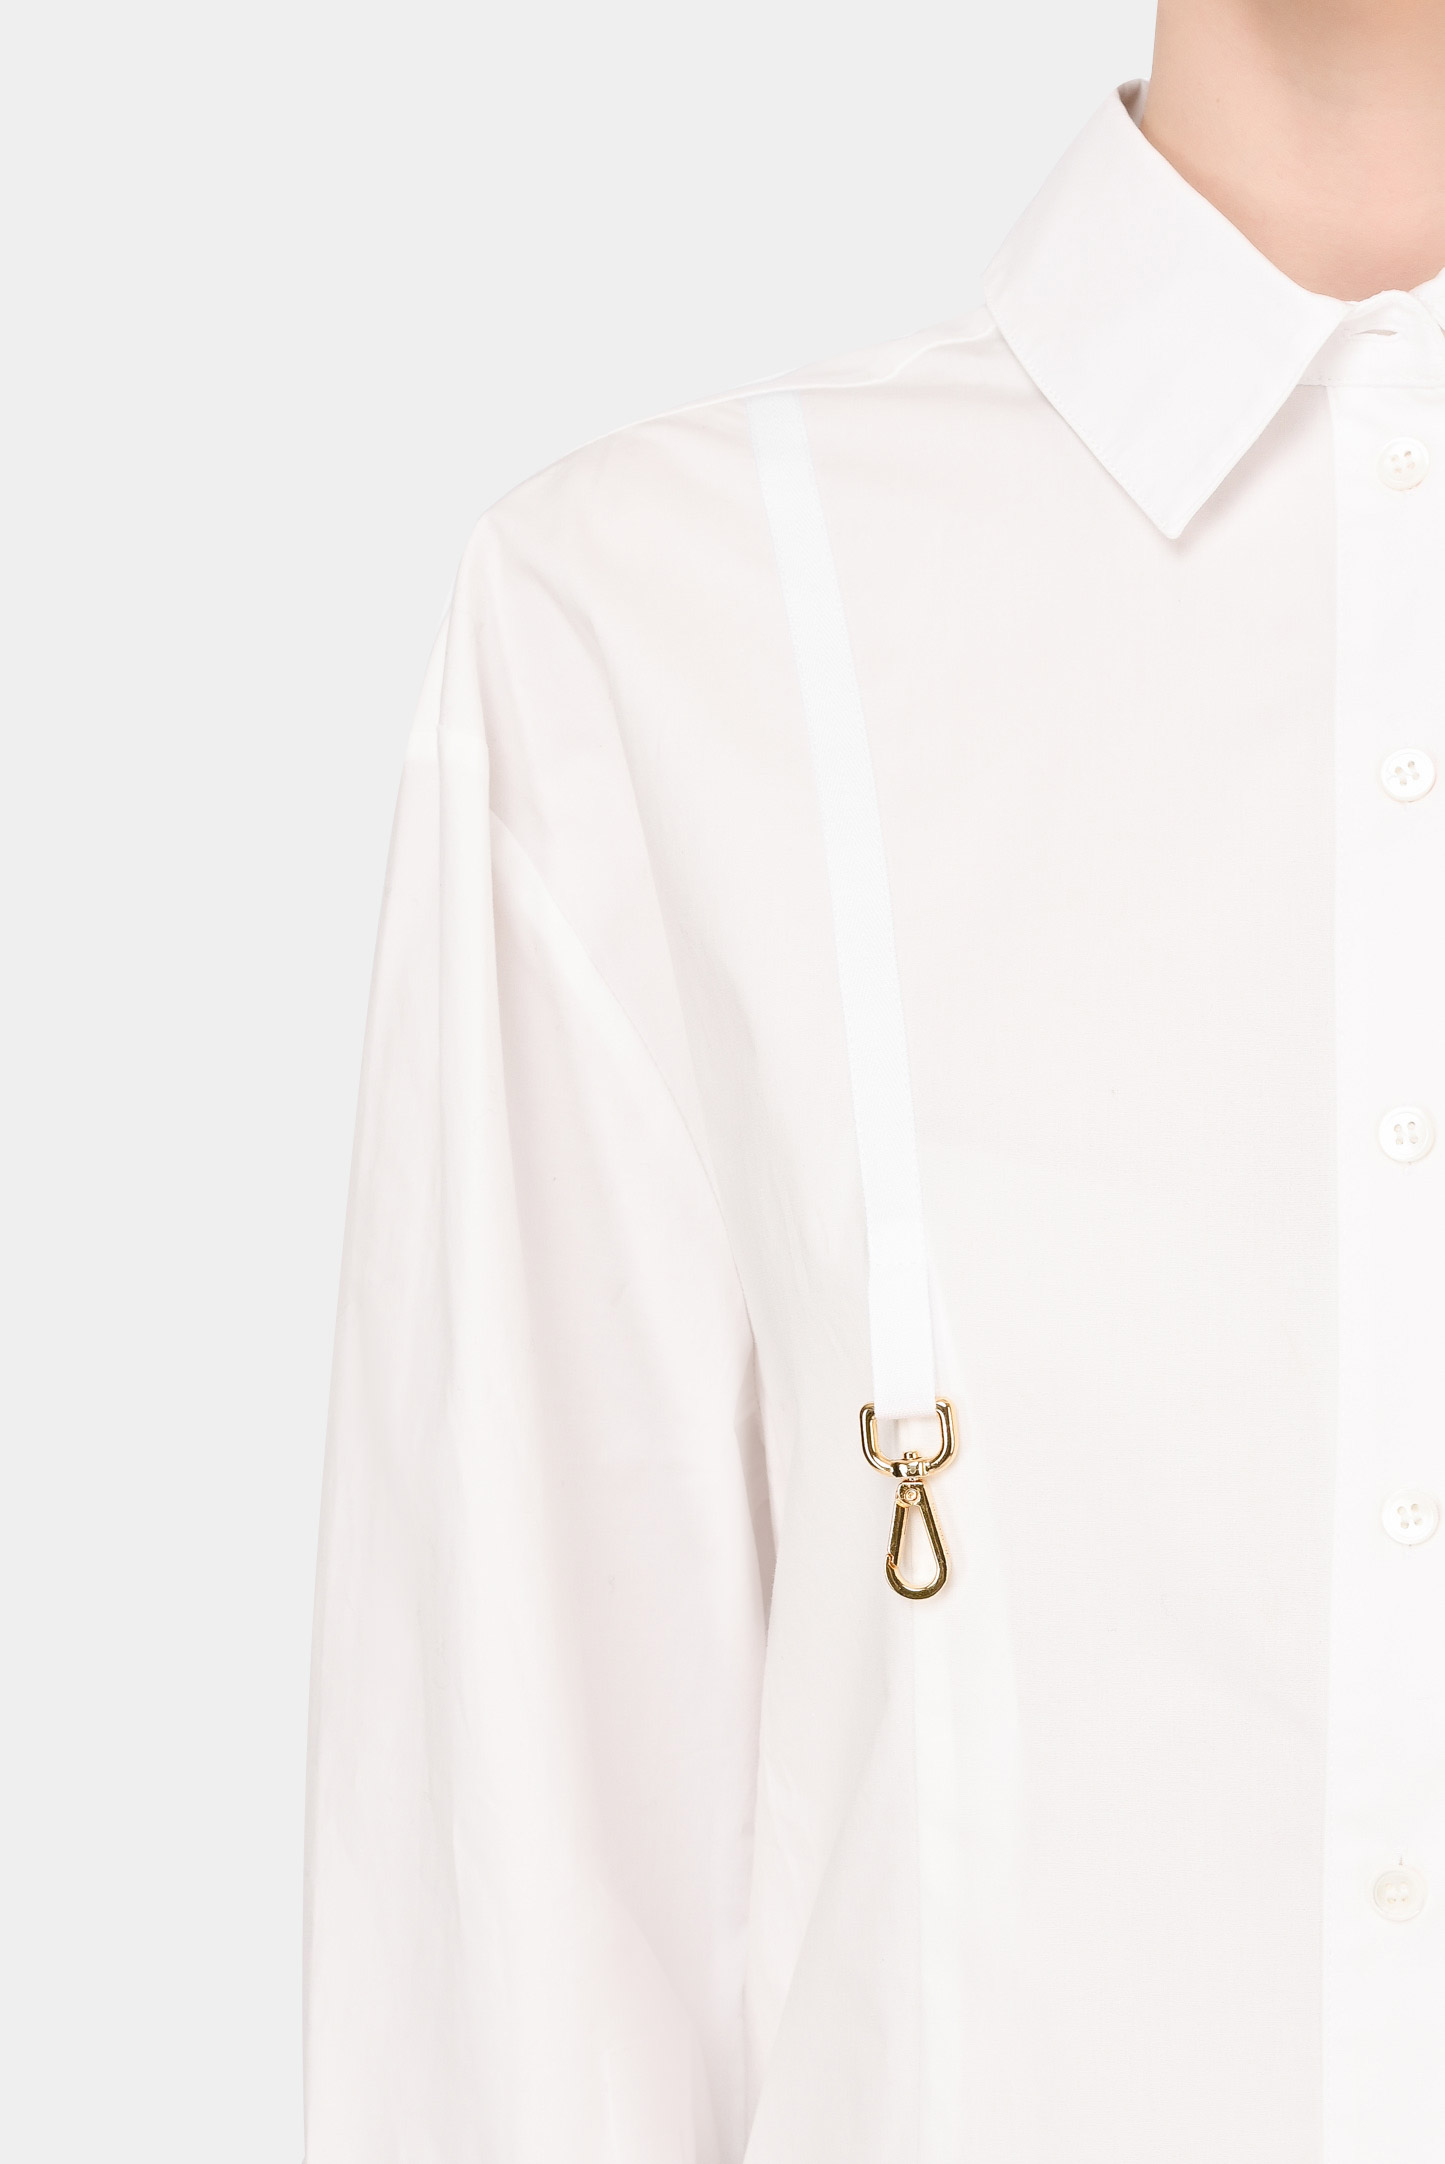 Блуза JACQUEMUS 213SH004, цвет: Белый, Женский